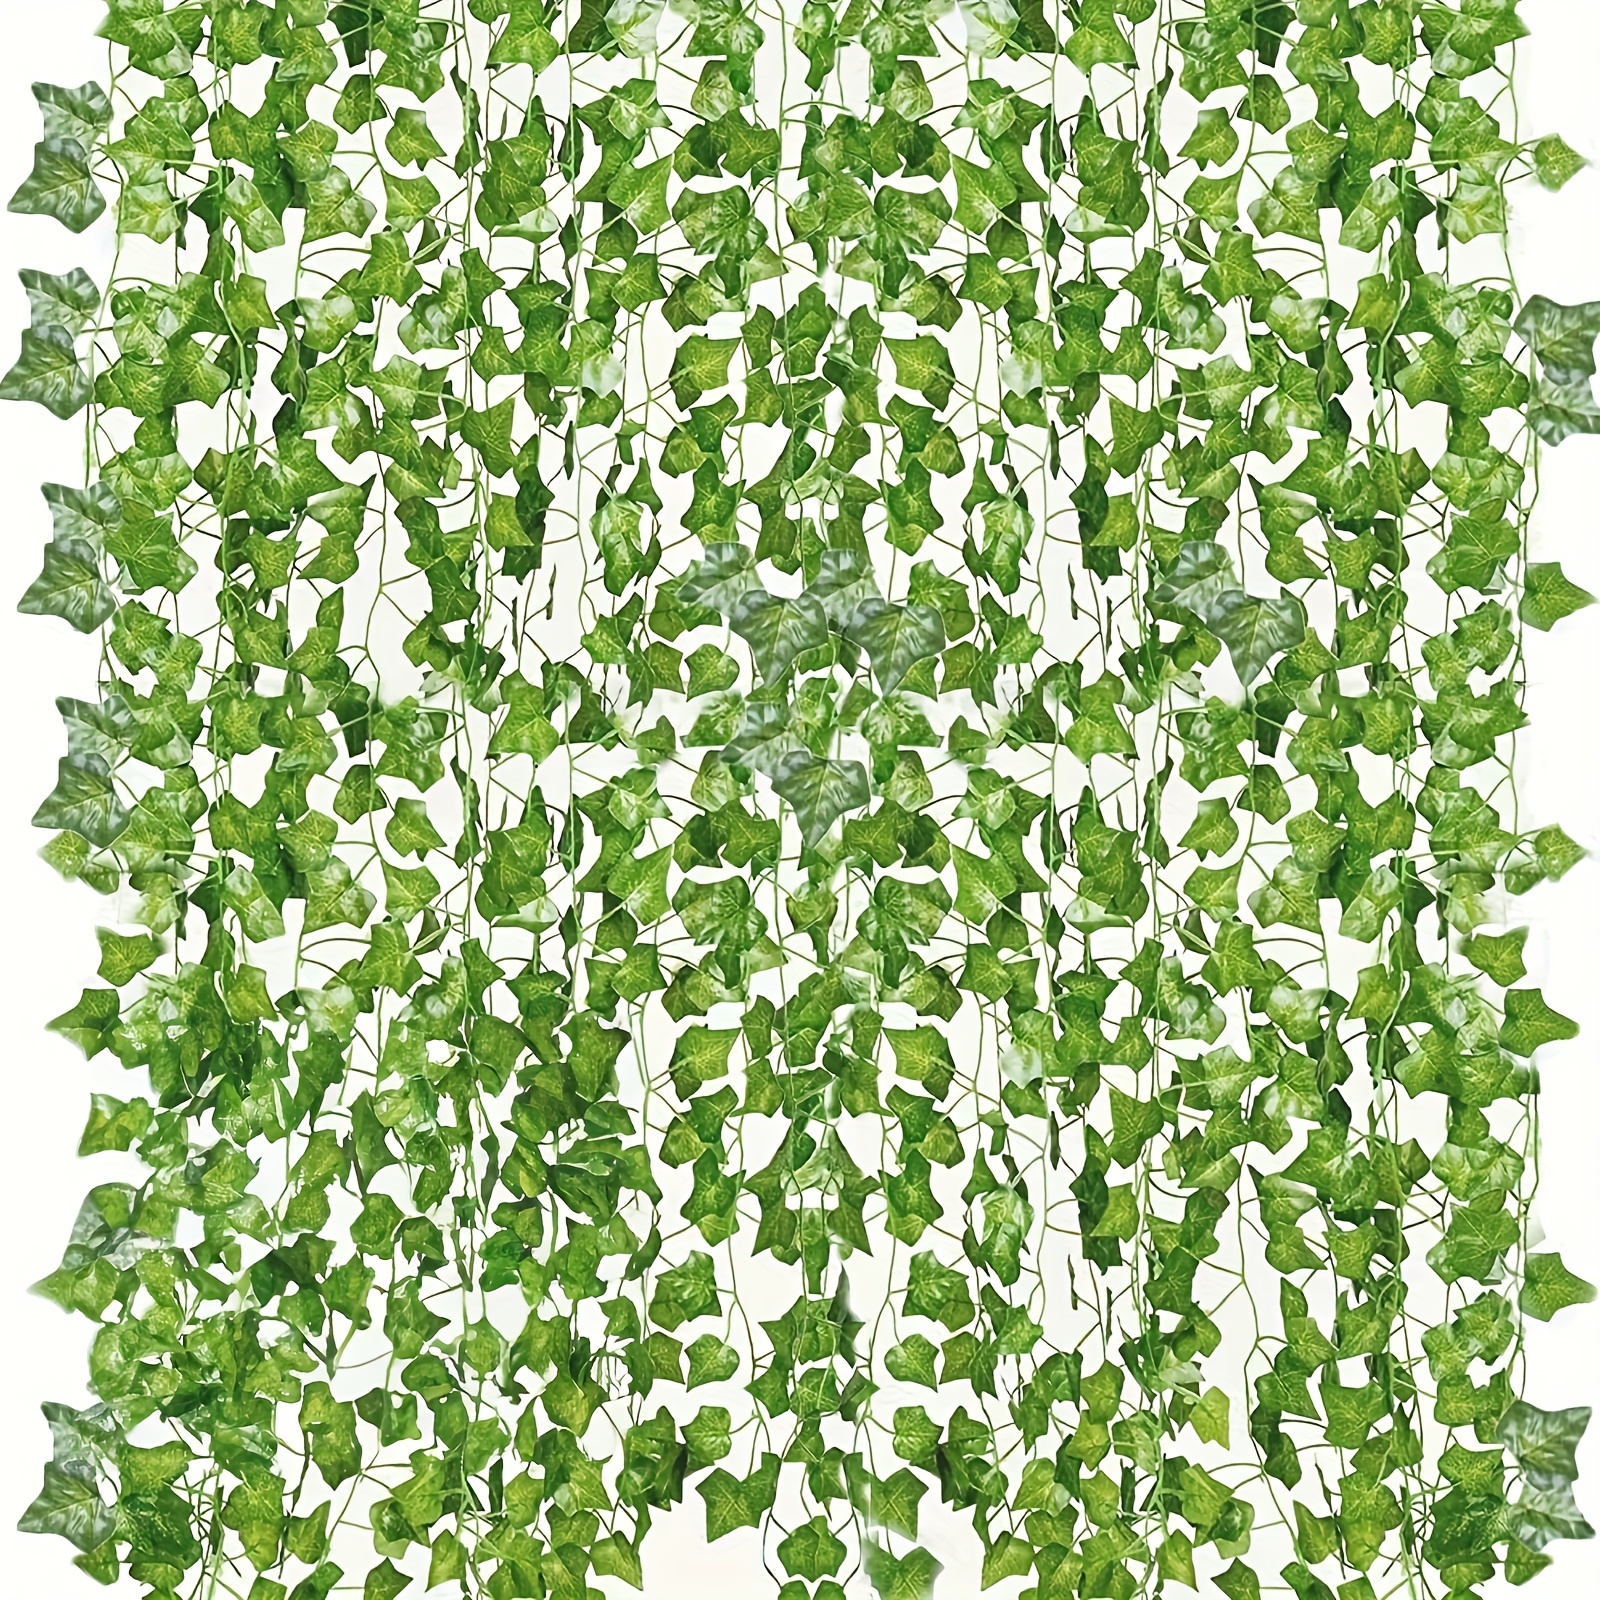 Decorative Ivy Vine 24pcs Artificial Greenery Vines Fake Leaves